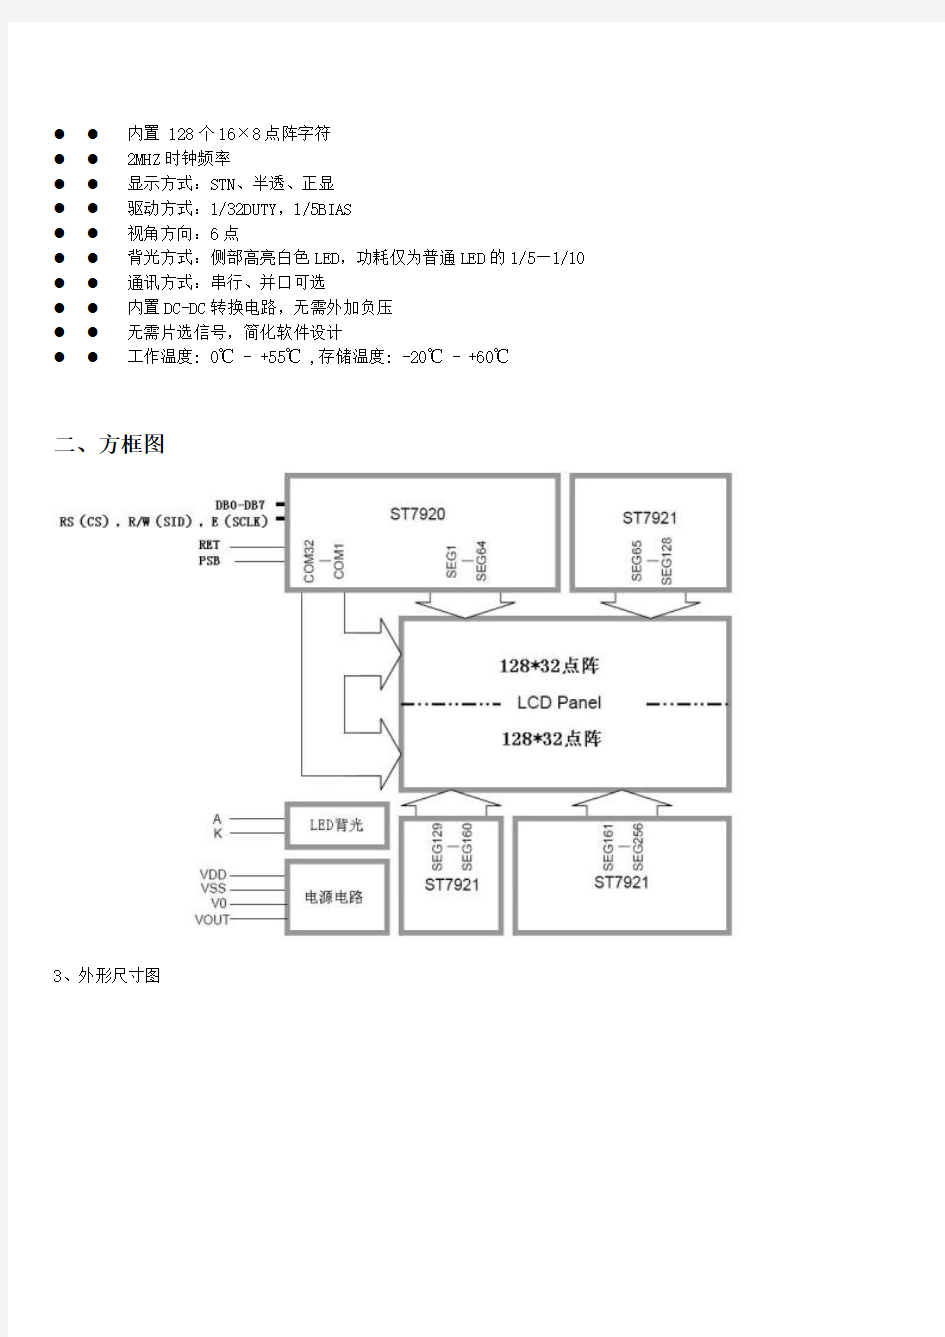 LCD12864中文字库说明书